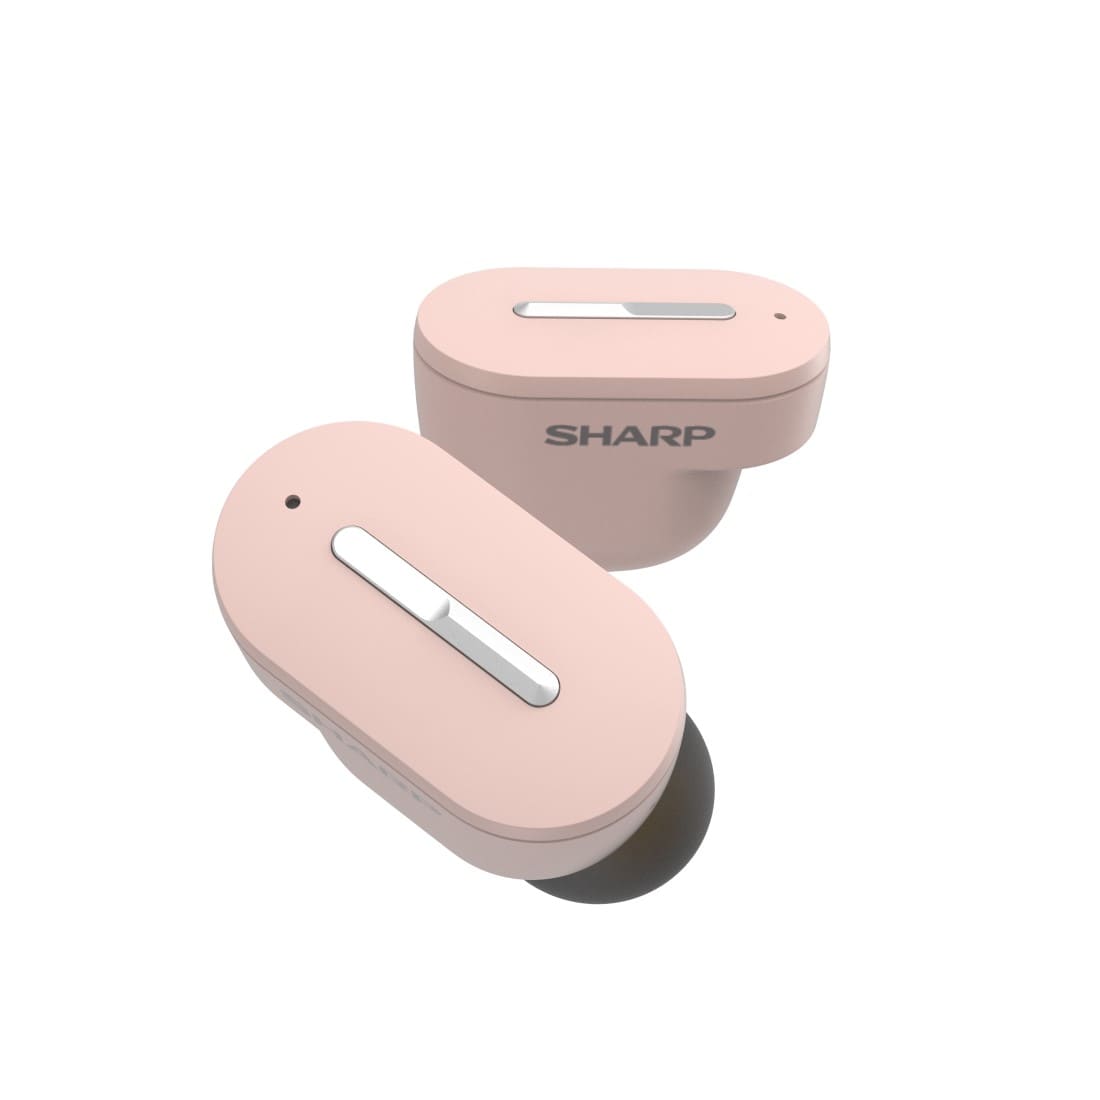 SHARP 耳あな型補聴器 メディカルリスニングプラグ OTC補聴器 ナチュラルピンク イヤホン型補聴器 MH-L1-P 管理医療機器